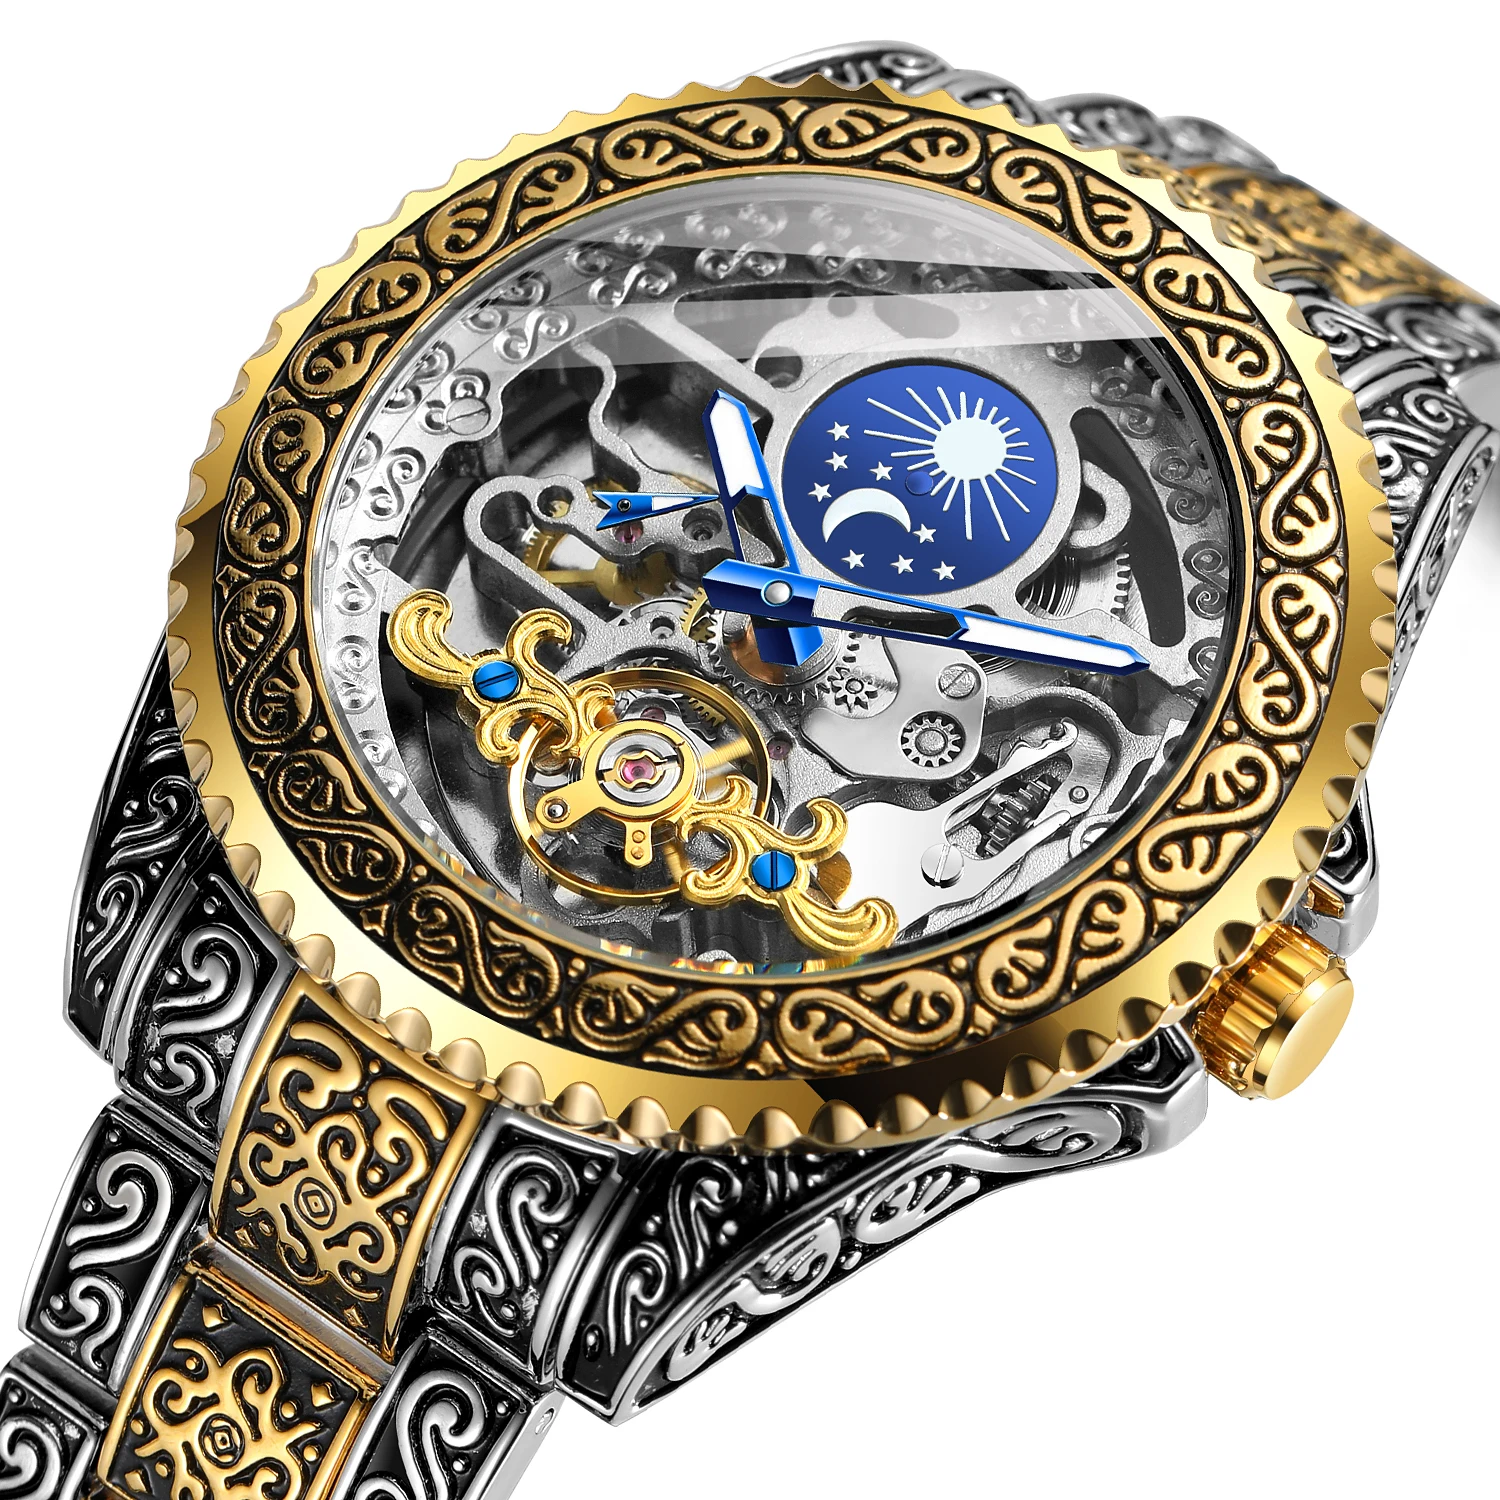 

Top Brand Forsining Skeleton Watch Men's Luxury Tourbillon Watch Mechanical Wristwatches Engraved Vintage Moon Phase Steel Watch